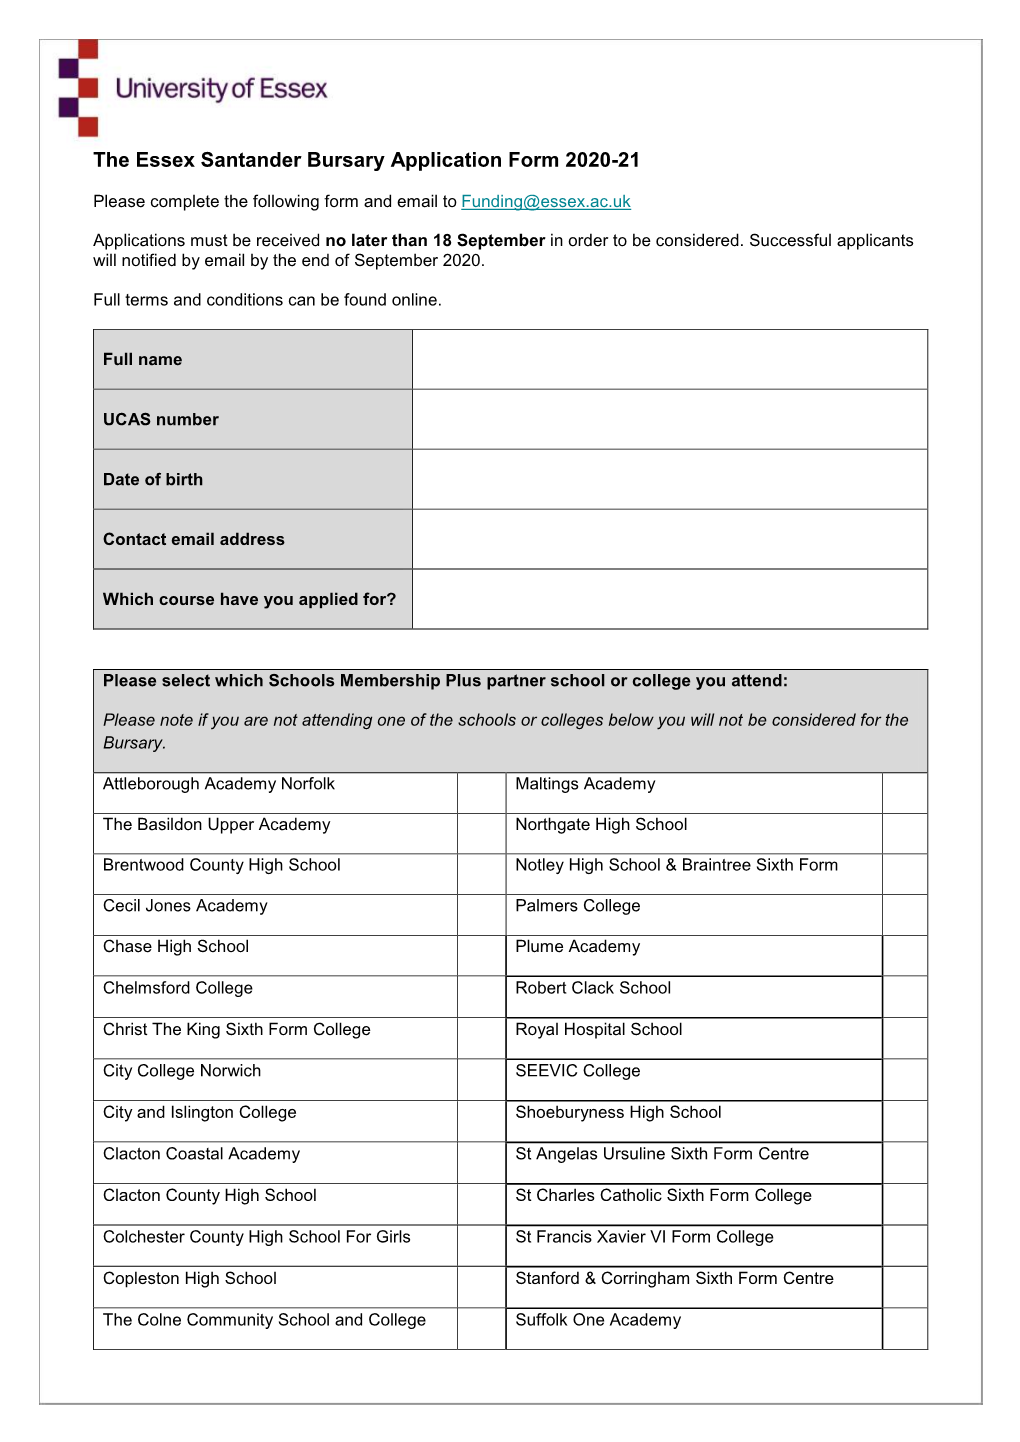 The Essex Santander Bursary Application Form 2020-21